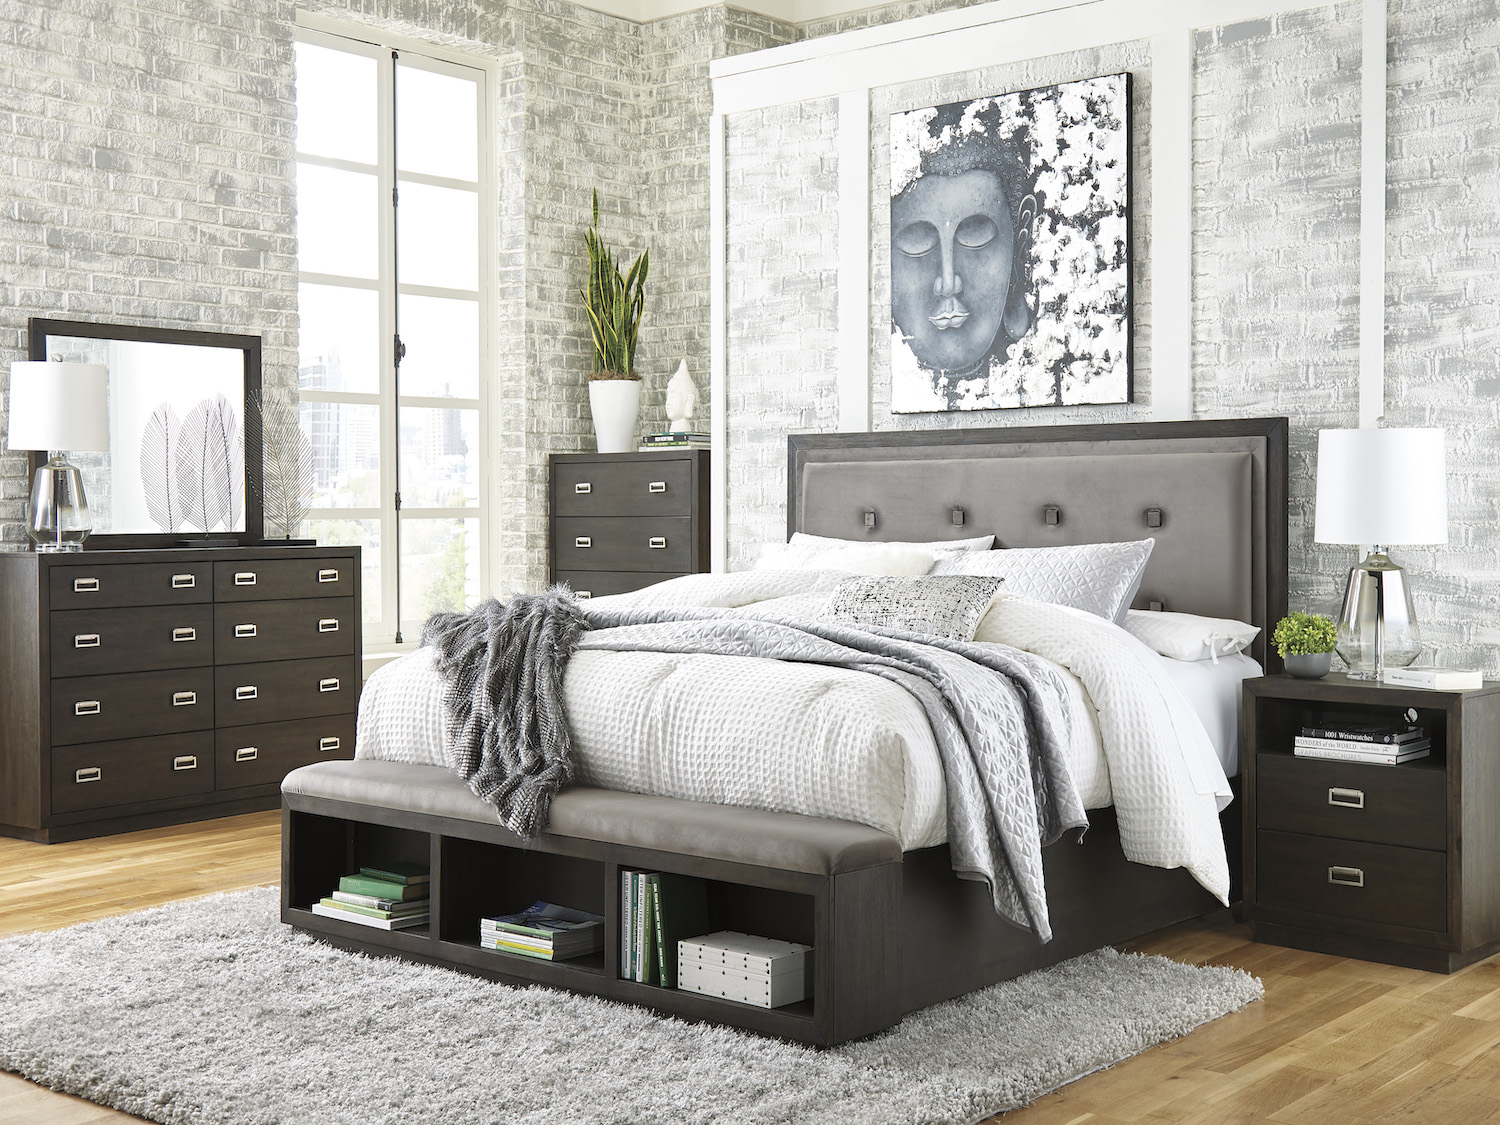 Ashley Contemporary Queen Bedroom Set - Hyndell 6 PC Queen Bedroom Set